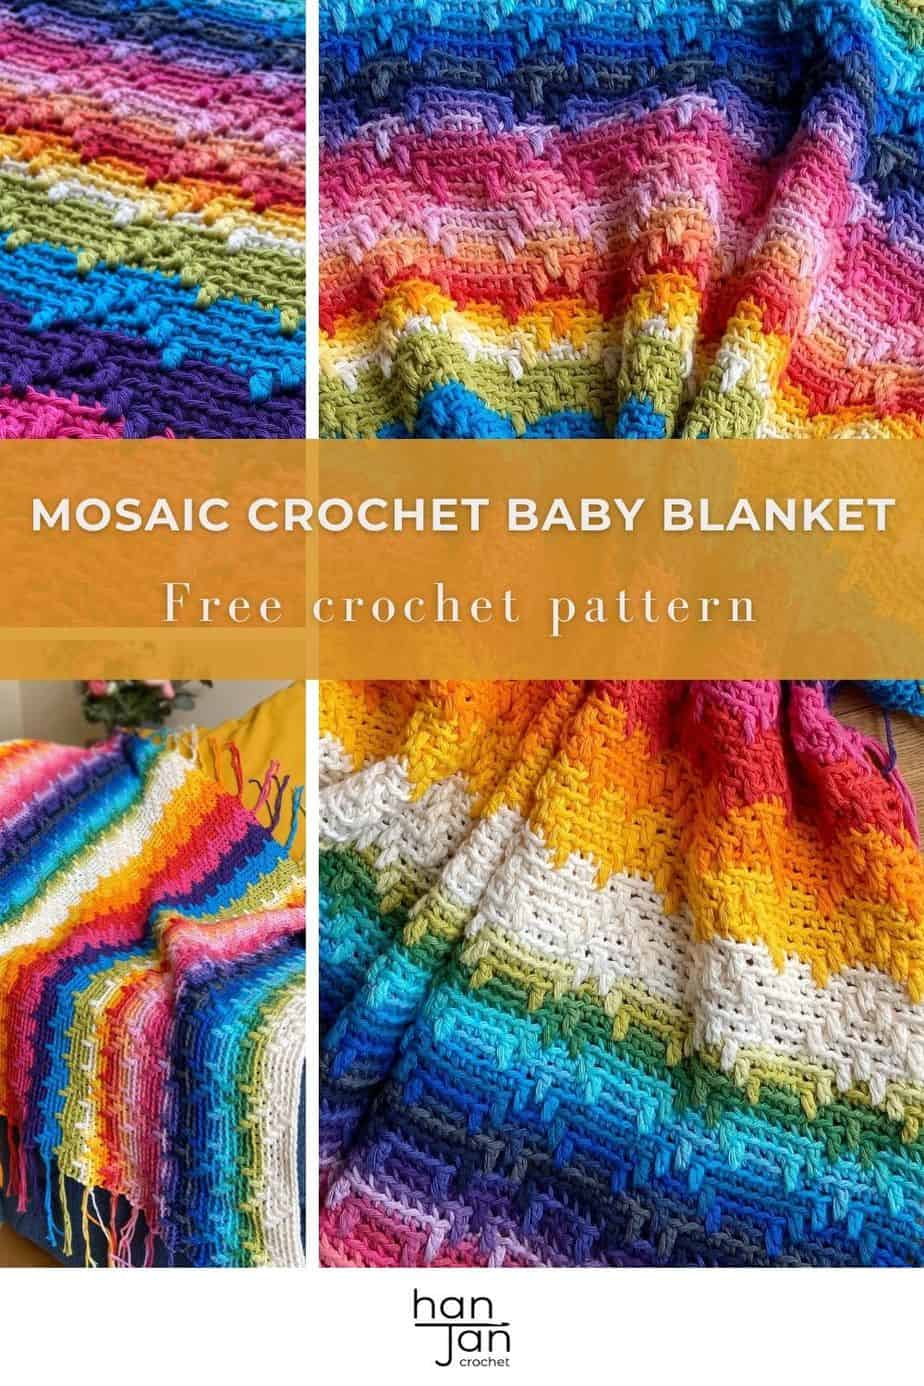 three images of rainbow crochet baby blanket